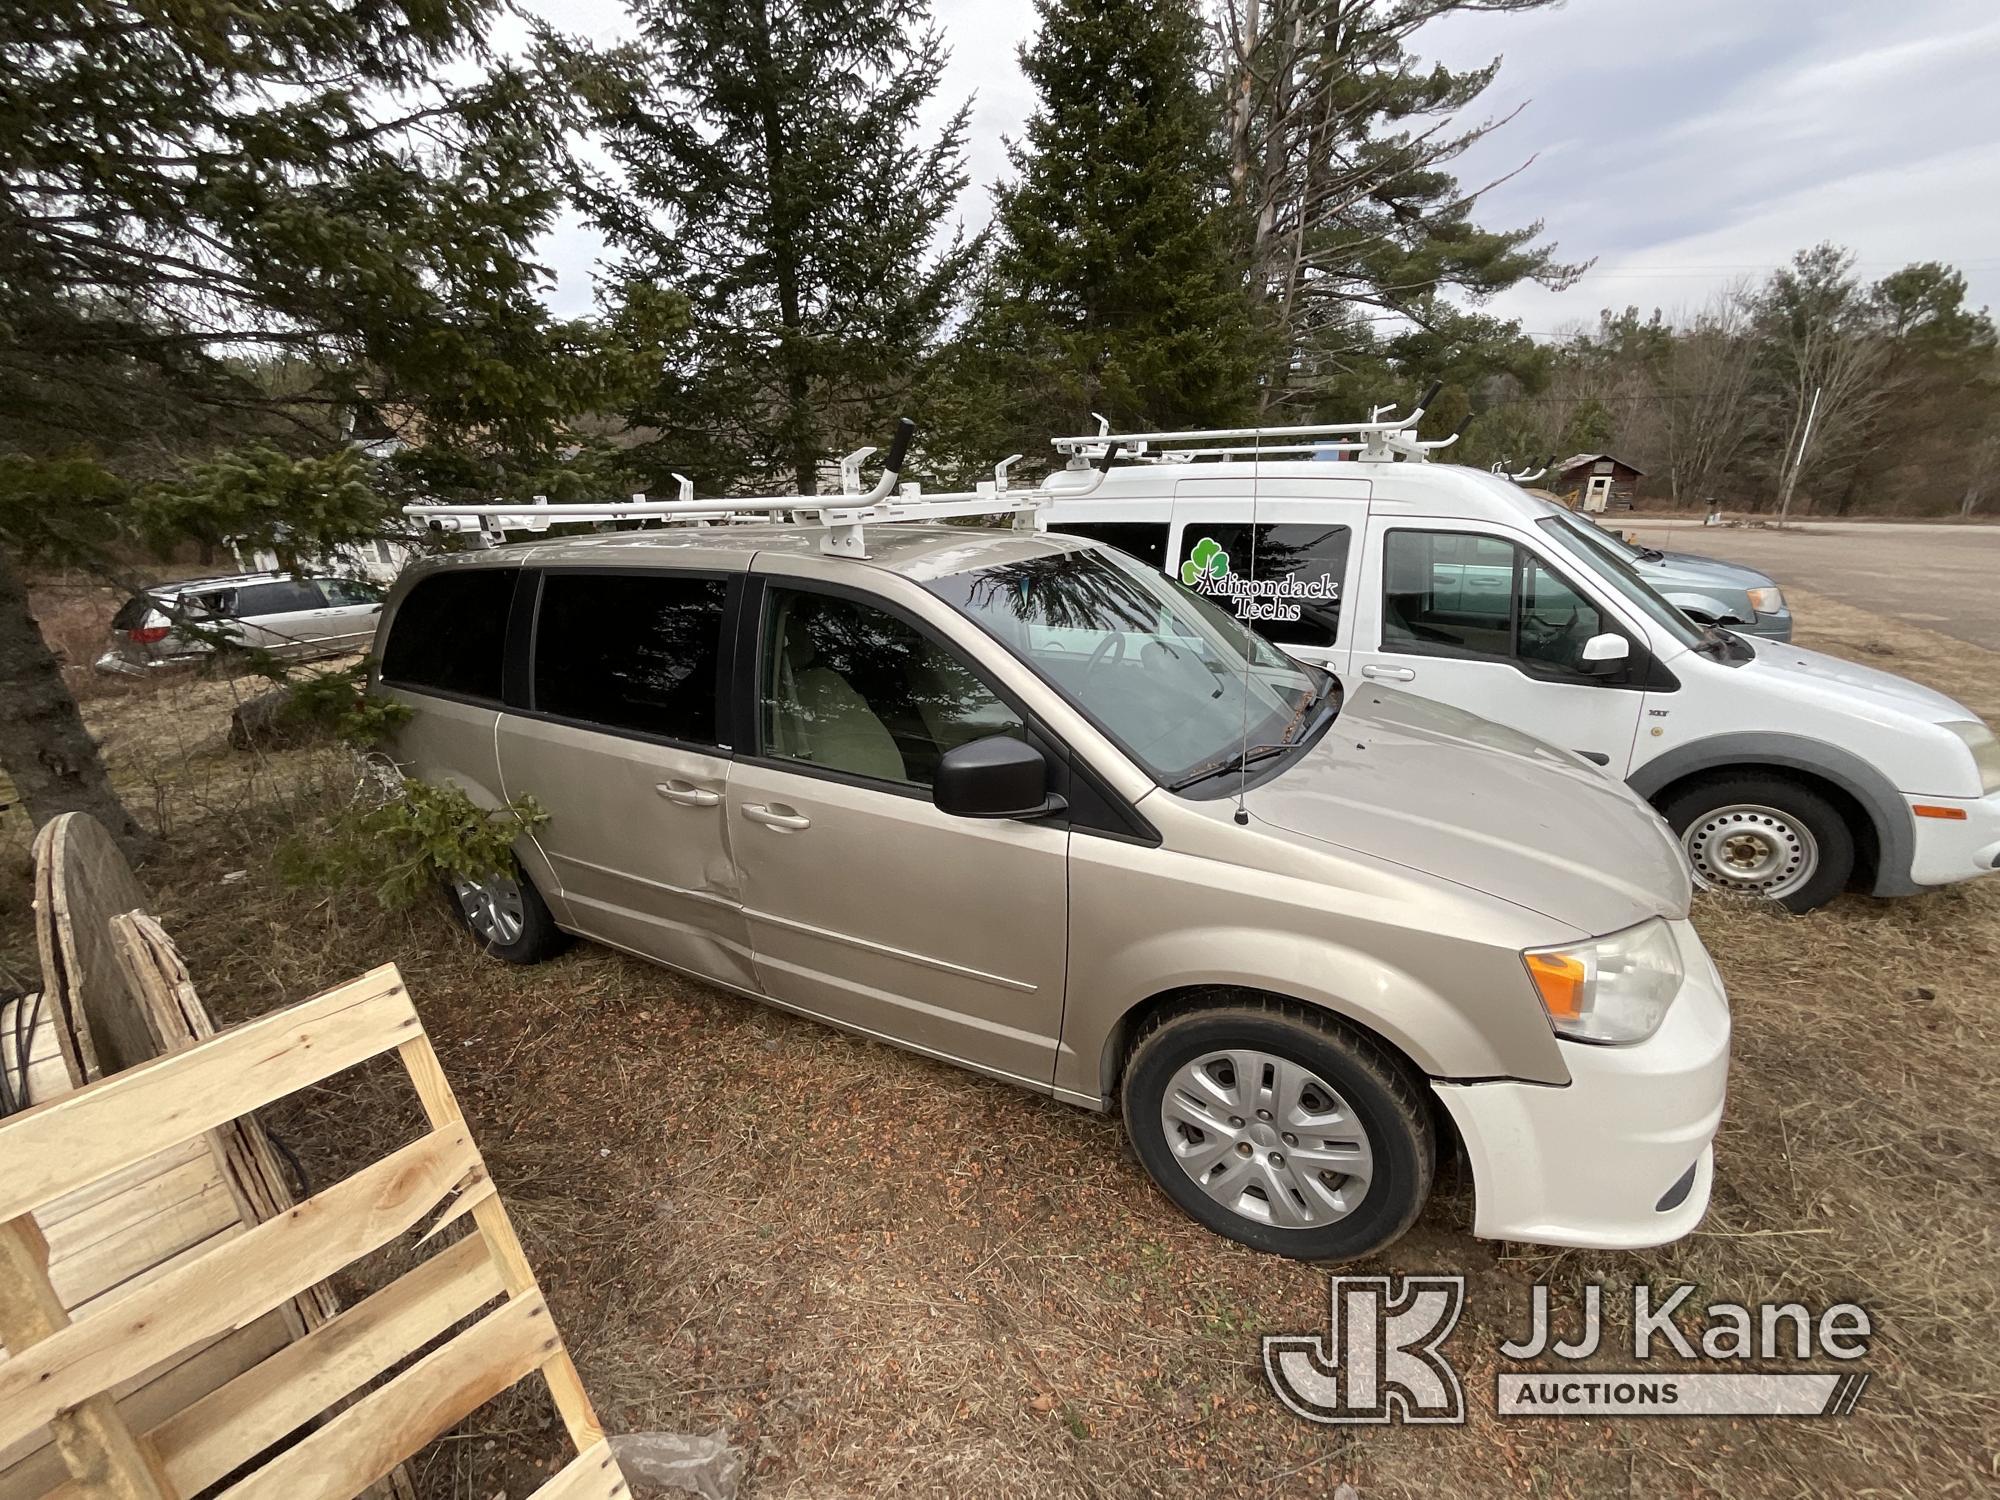 (Saint Regis Falls, NY) 2013 Dodge Grand Caravan SE Mini Passenger Van does not run or move, missing